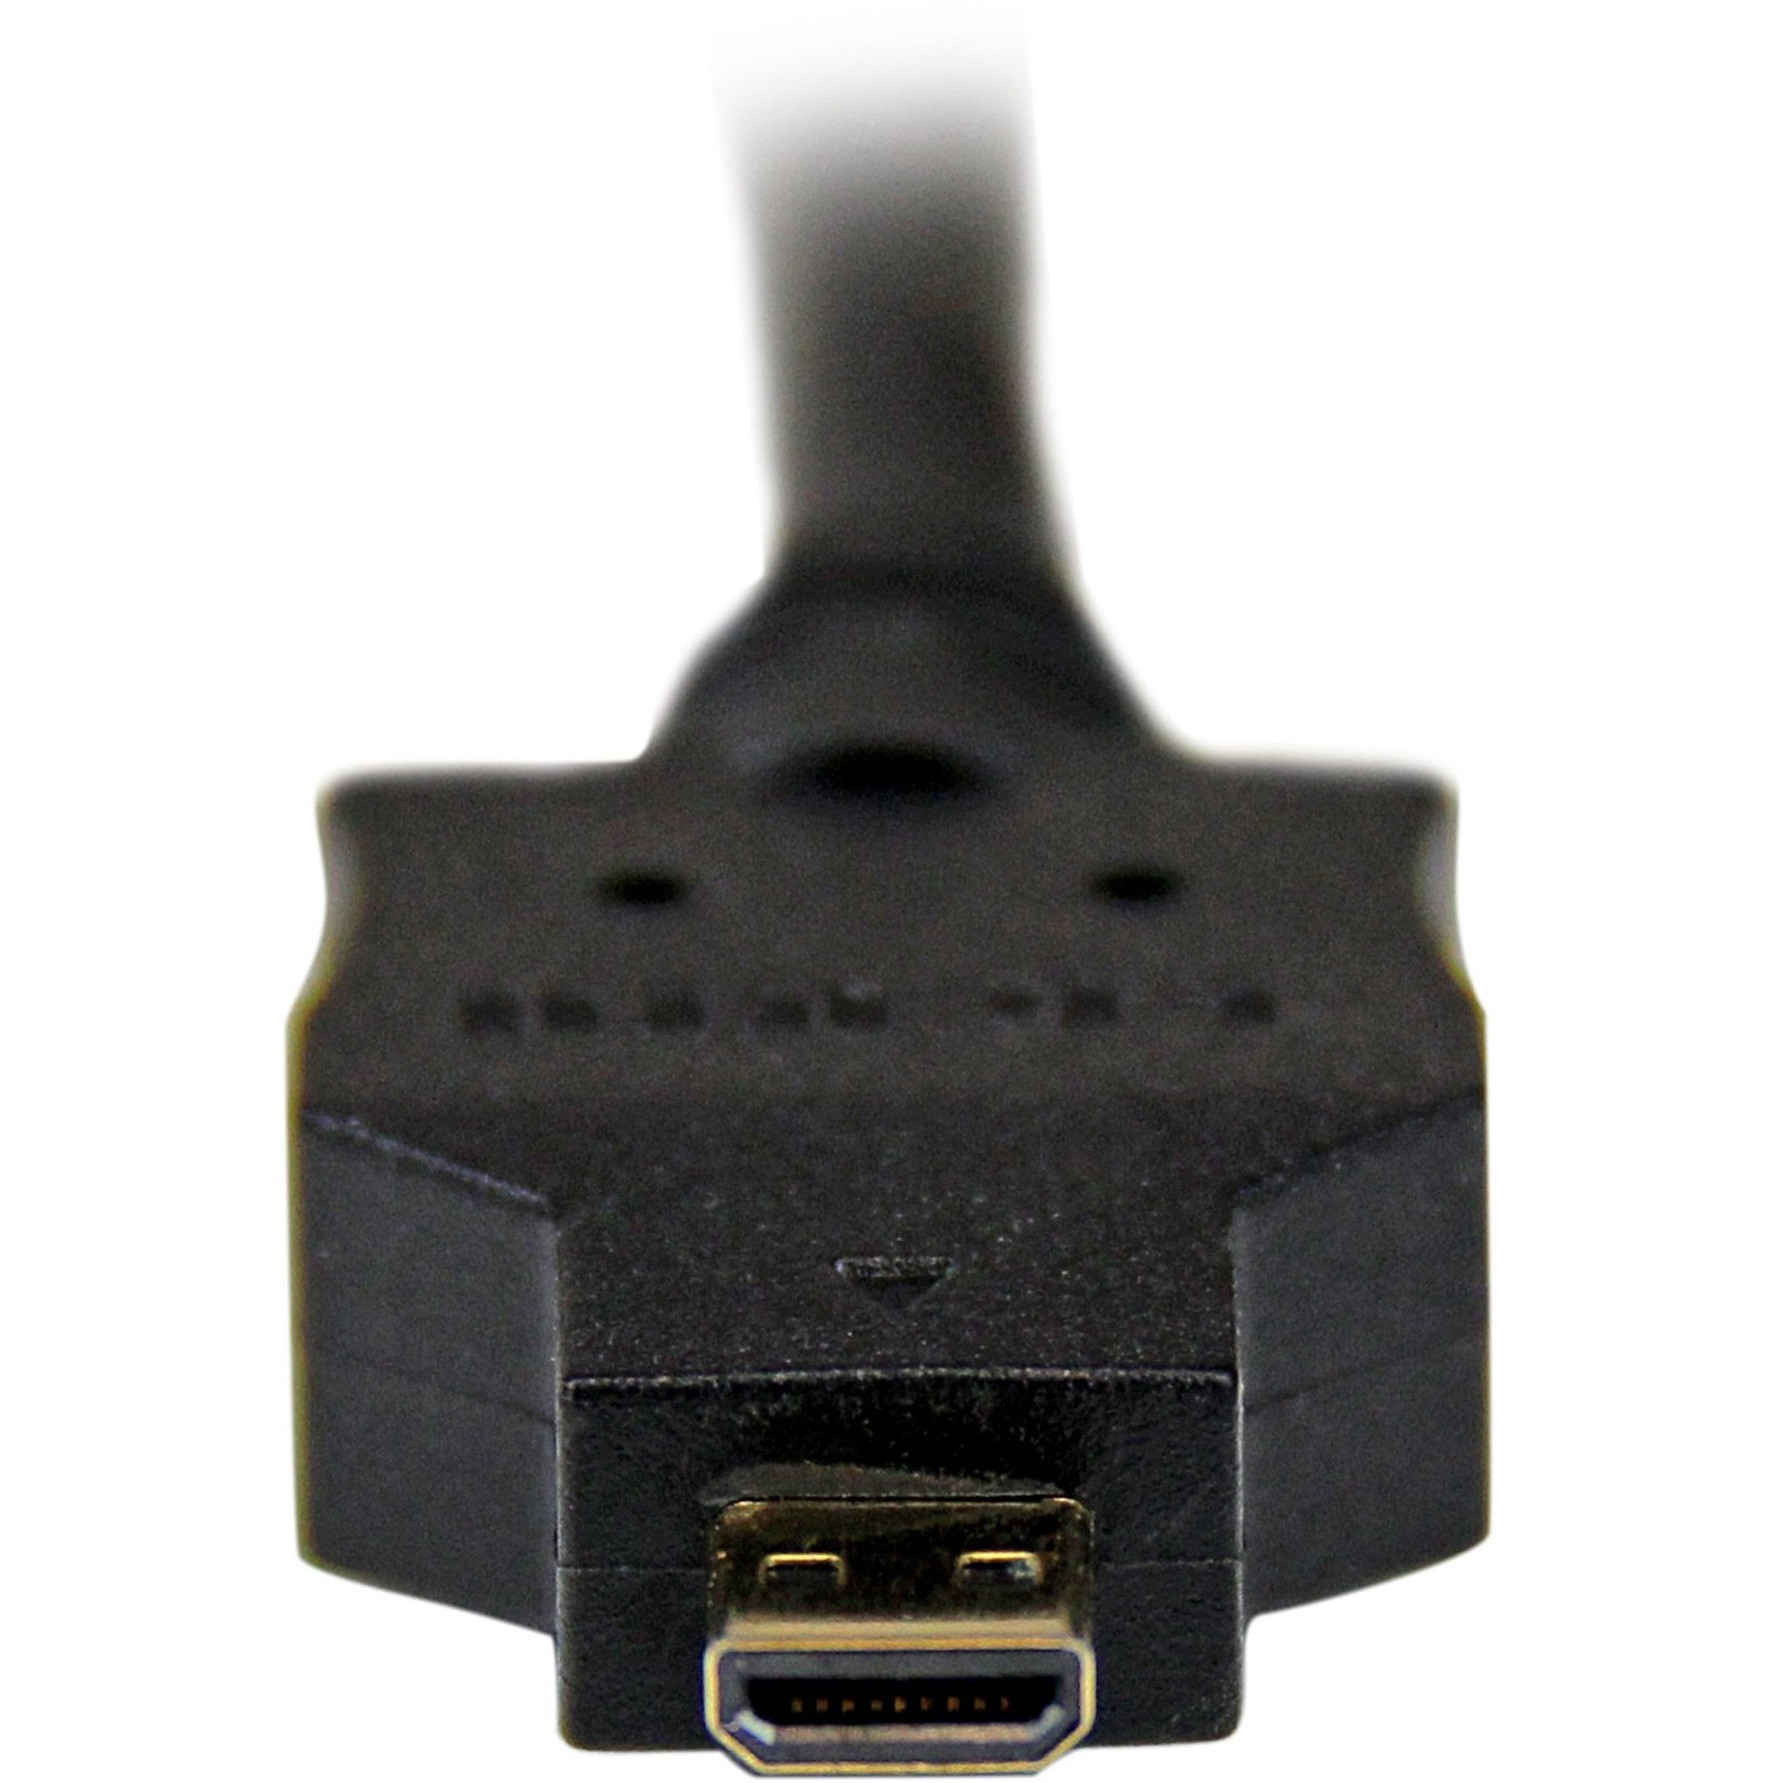 Bryde igennem ubemandede nederlag Startech .com 6ft (2m) Micro HDMI to DVI Cable, Micro HDMI to DVI Adapter  Cable, Micro HDMI Type-D to DVI-D Monitor/Display Converter Cord6...  HDDDVIMM2M - Corporate Armor